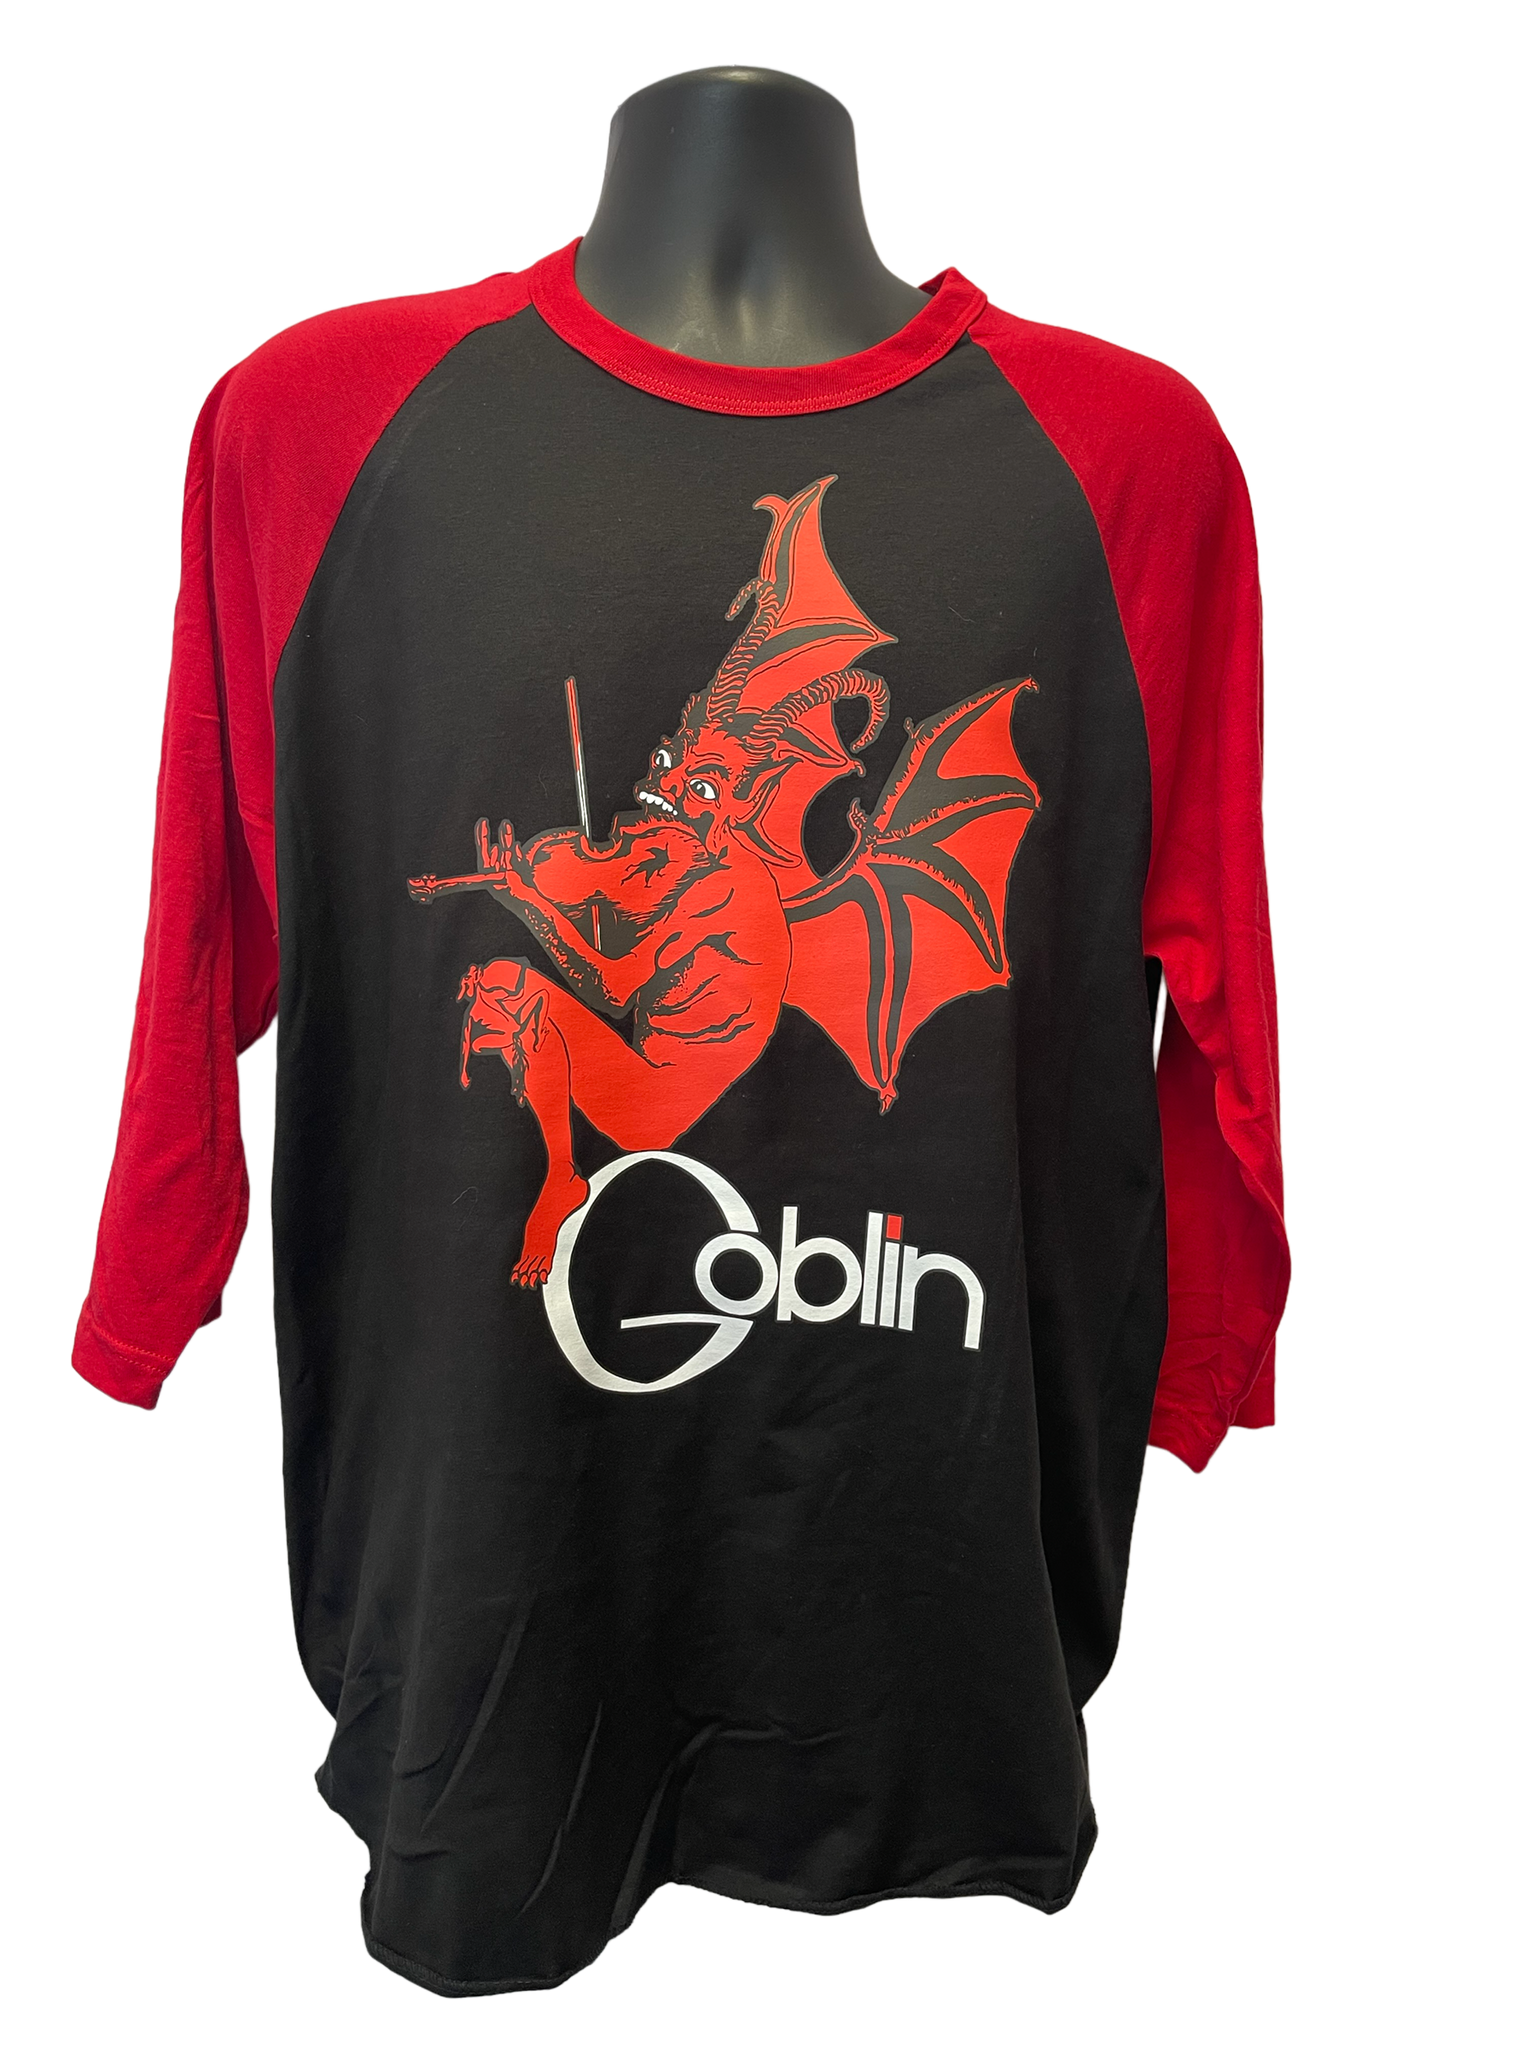 GOBLIN "ROLLER" BLACK & RED 3/4 SLEEVE RAGLAN